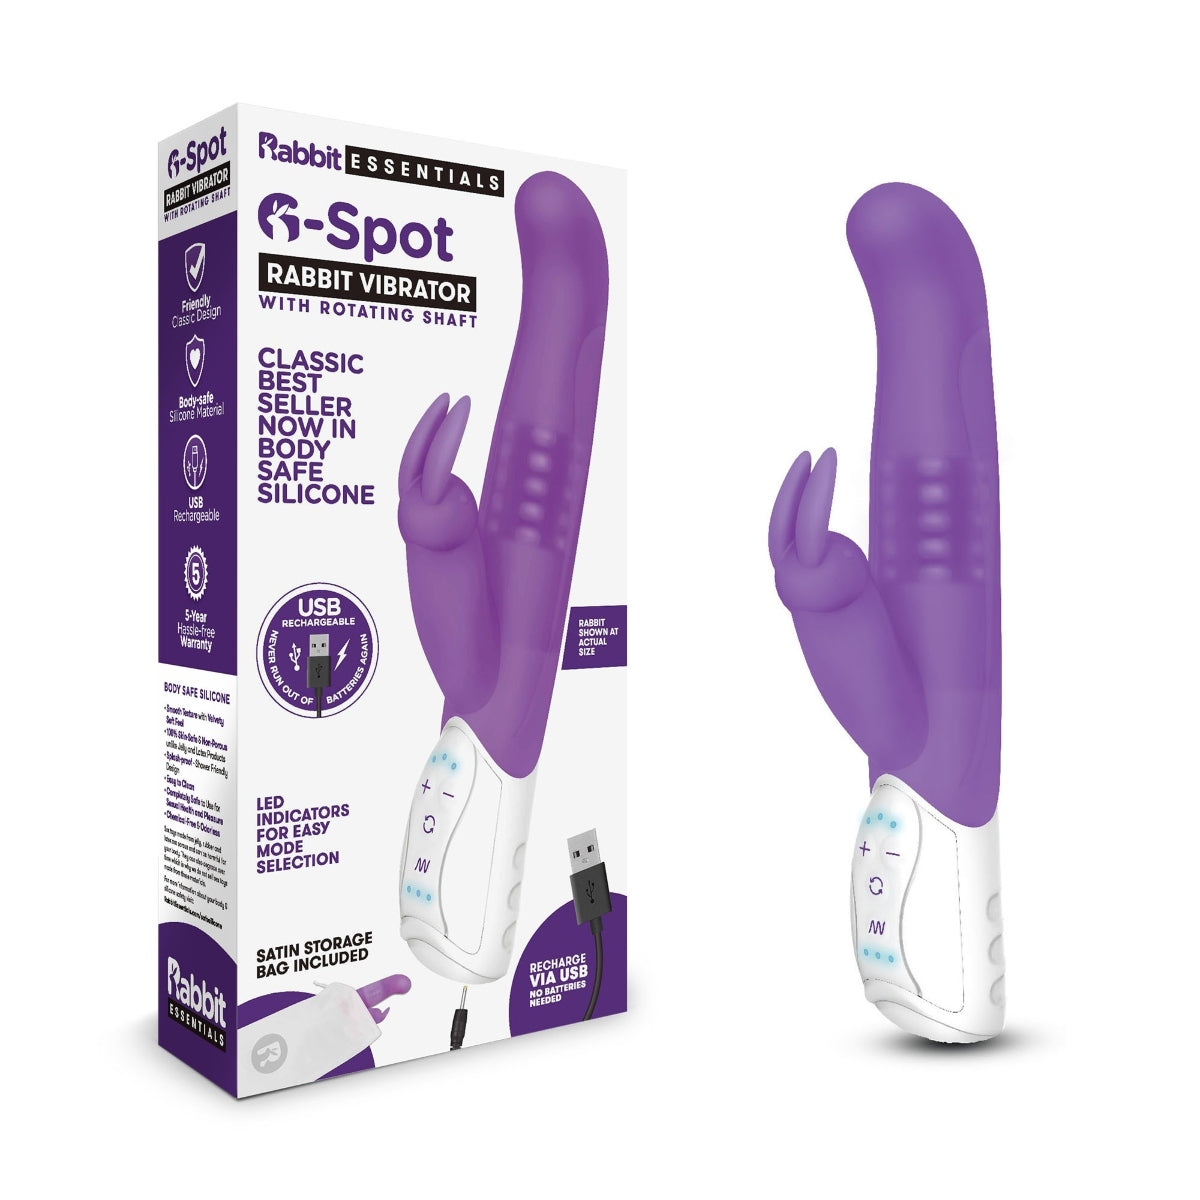 Rabbit Essentials G-Spot Rabbit Vibrator With Rotating Shaft Purple